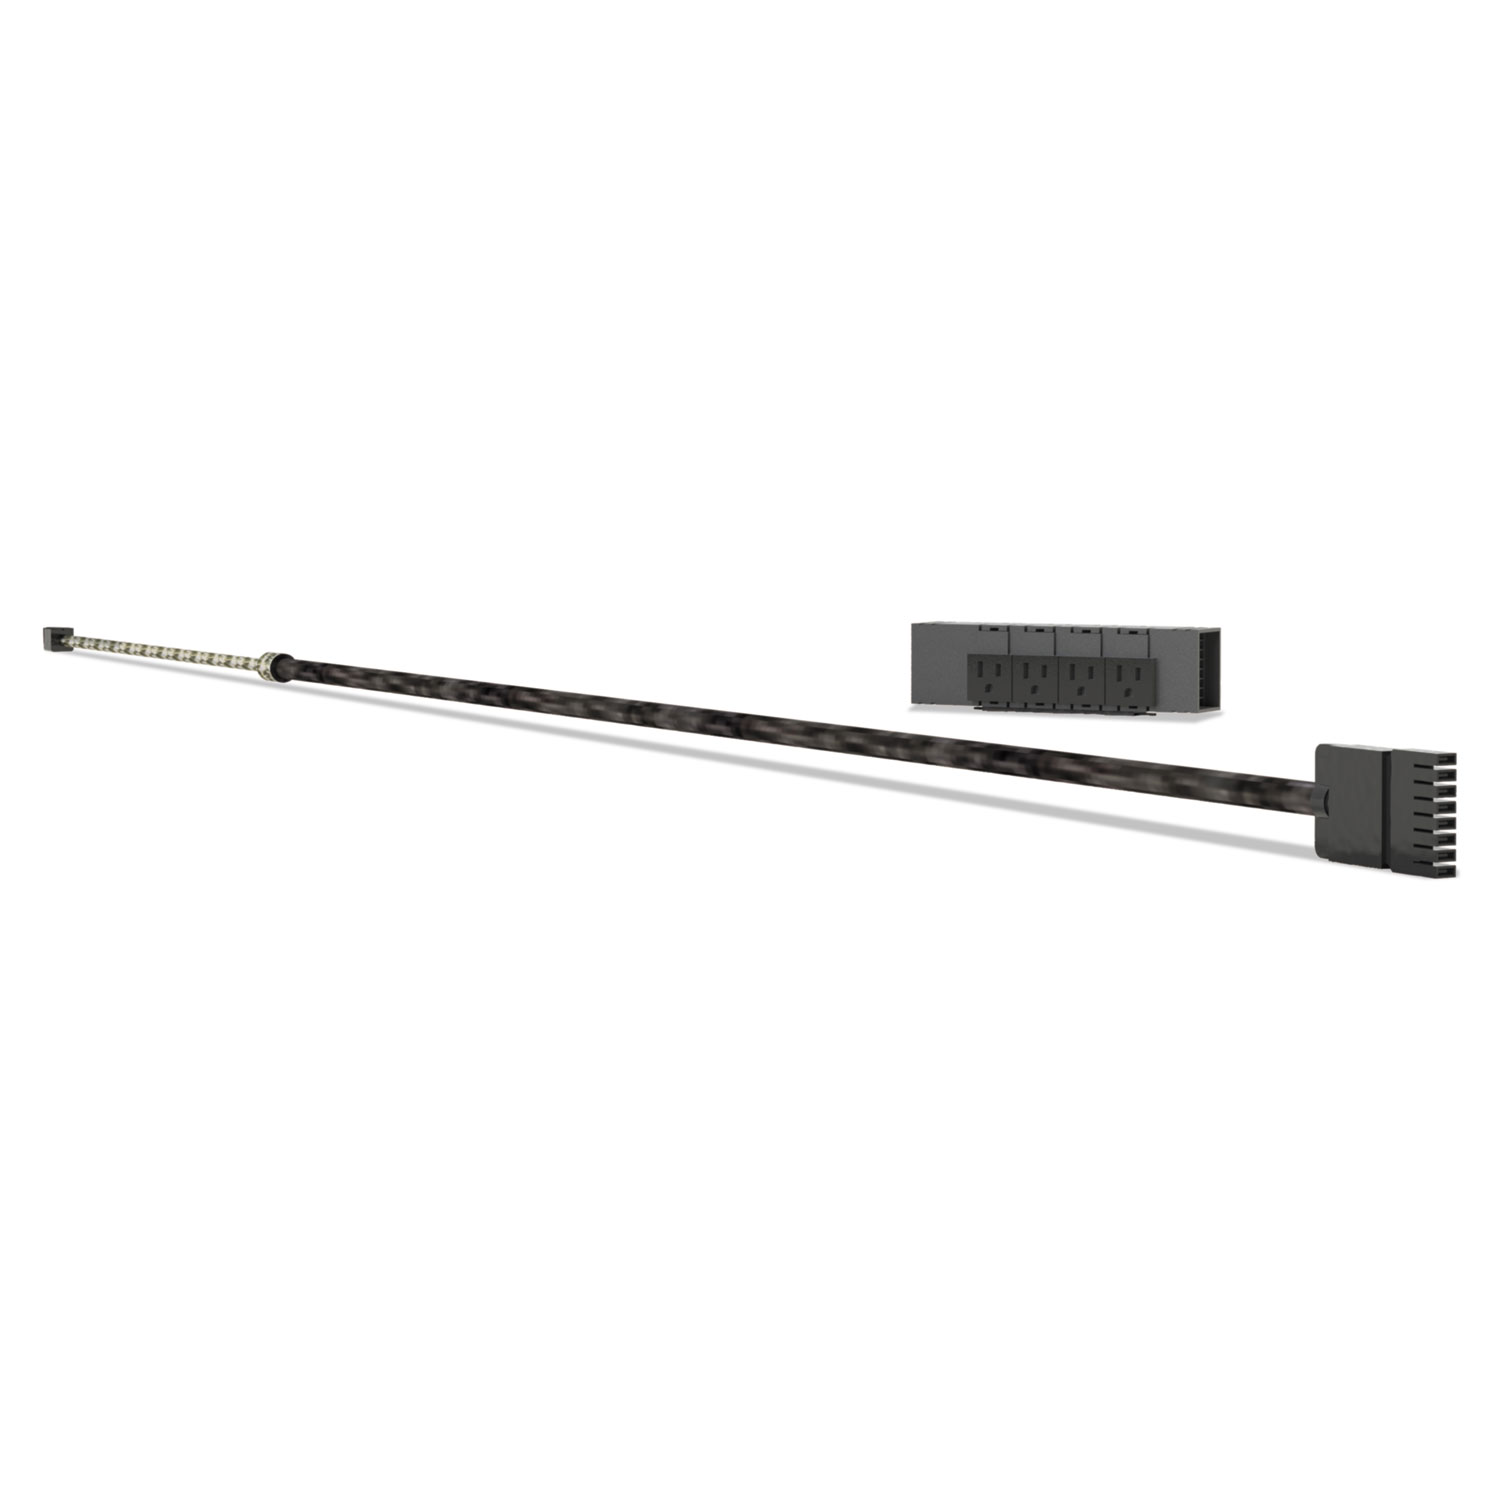  Safco EZEKSBP1 e5 Series Single-Circuit Plug-In Power Kit for 30 Technology Beltway, Black (MLNEZEKSBP1) 